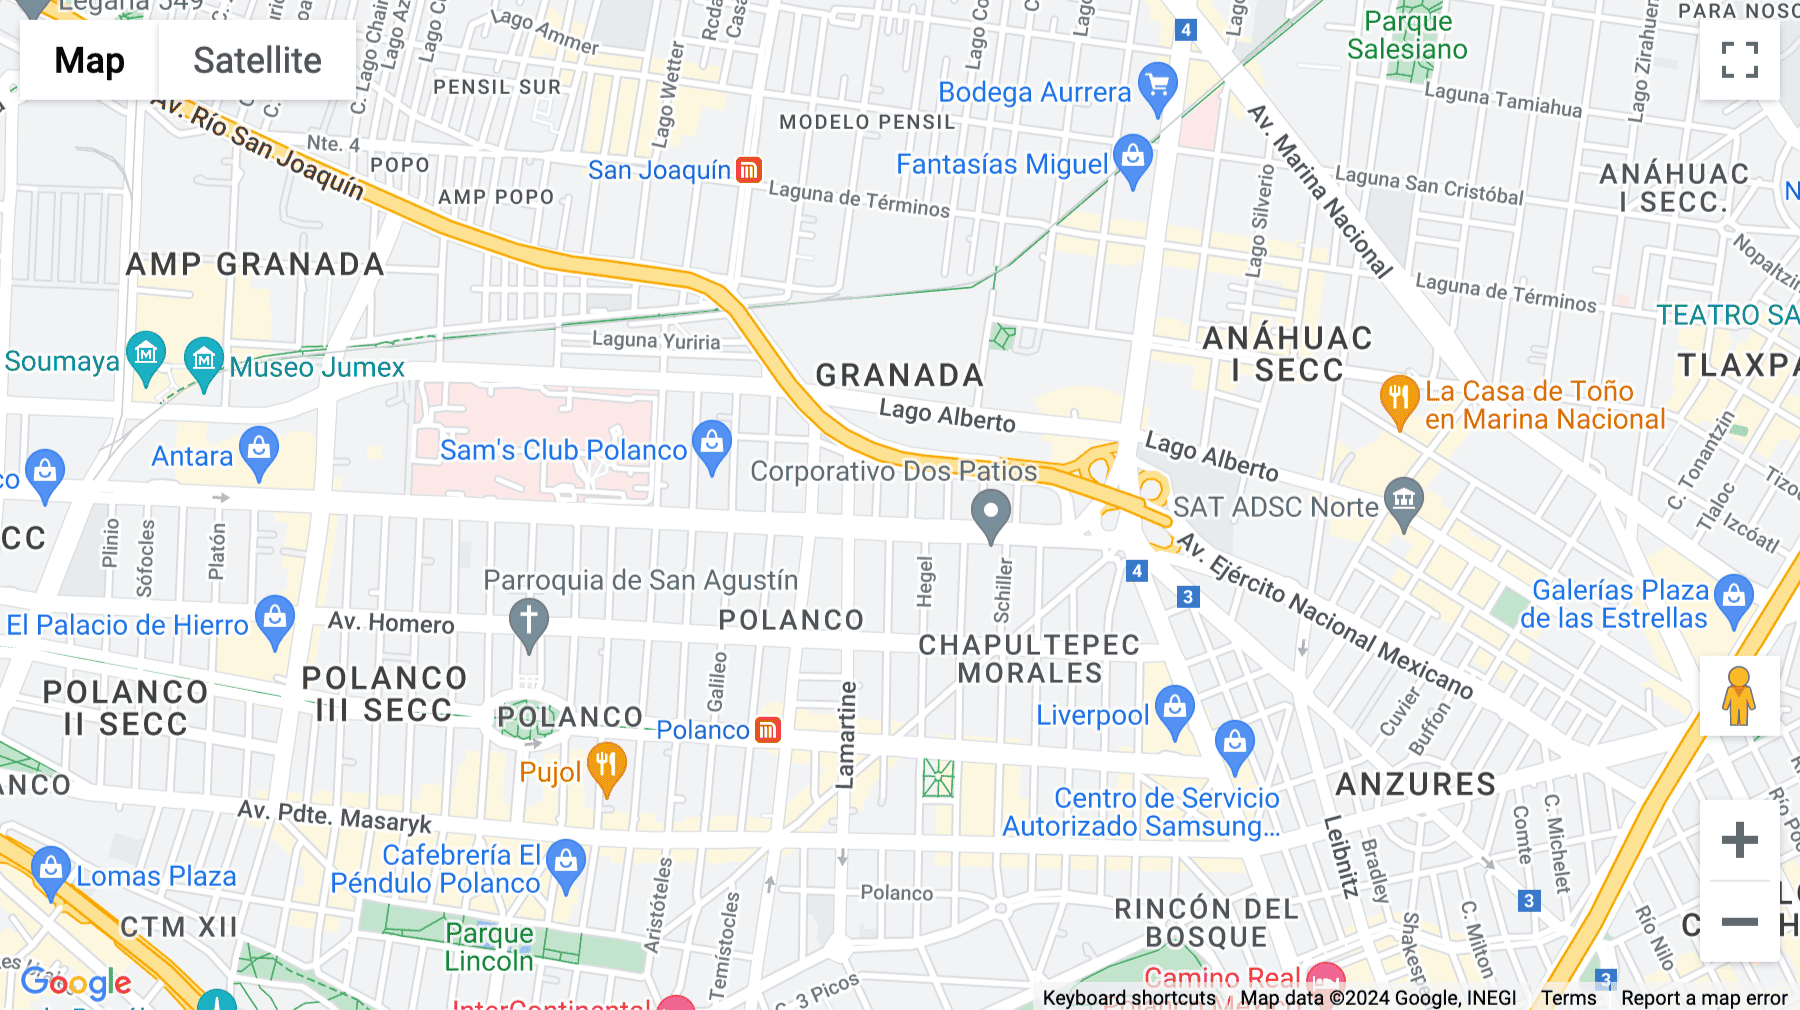 Click for interative map of Avenida Ejército Nacional 453, Latitud Polanco, Piso 1, Colonia Granada, Mexico City